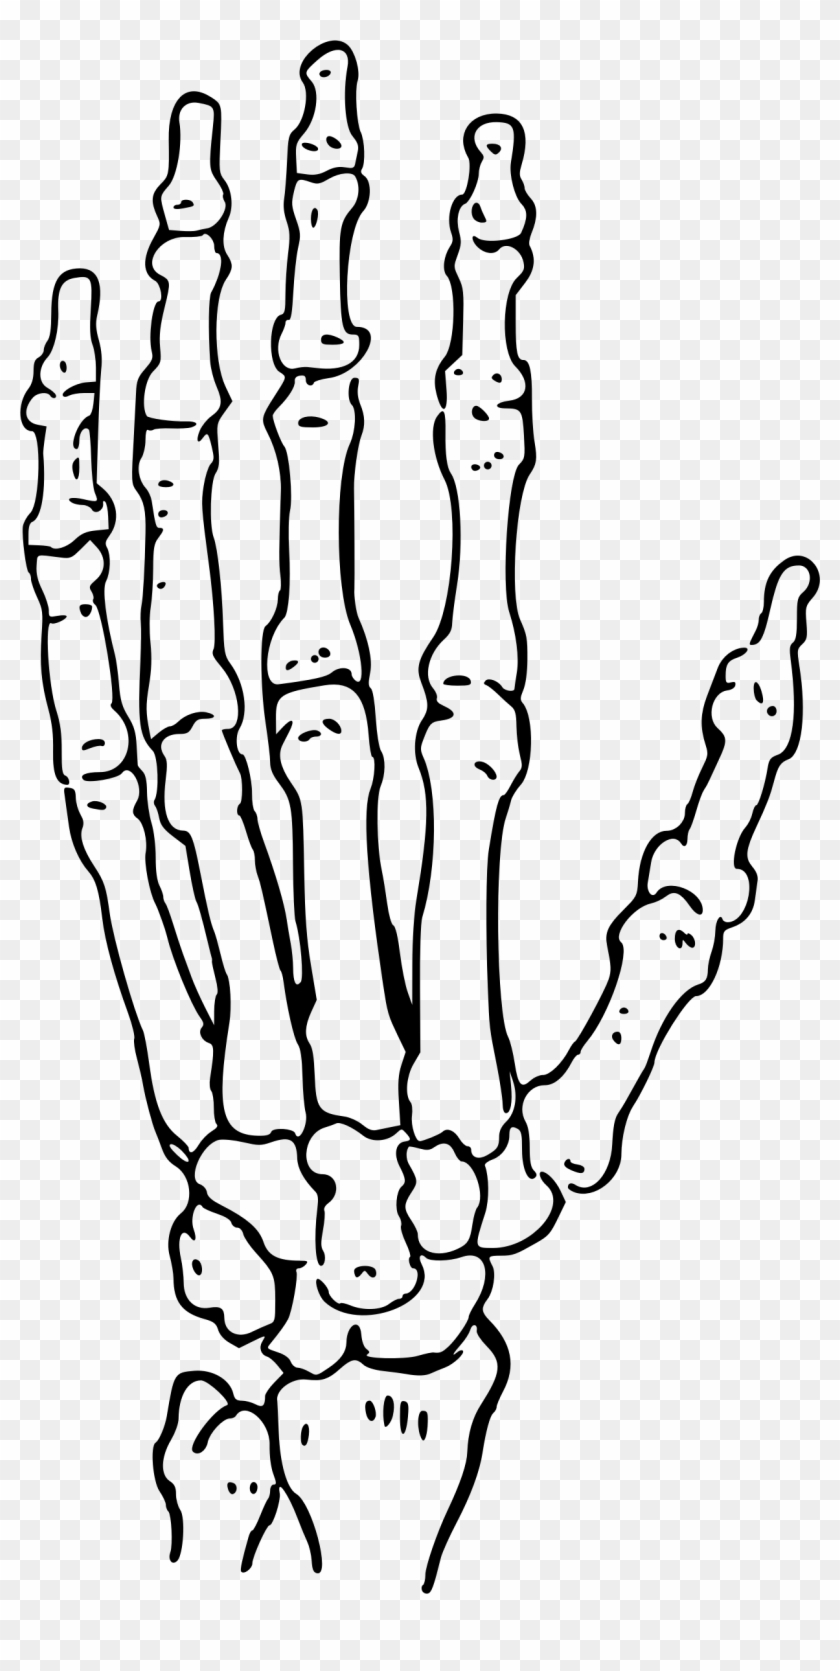 Of The Big Image Png - Skeleton Hands Clipart Transparent Png #2032967